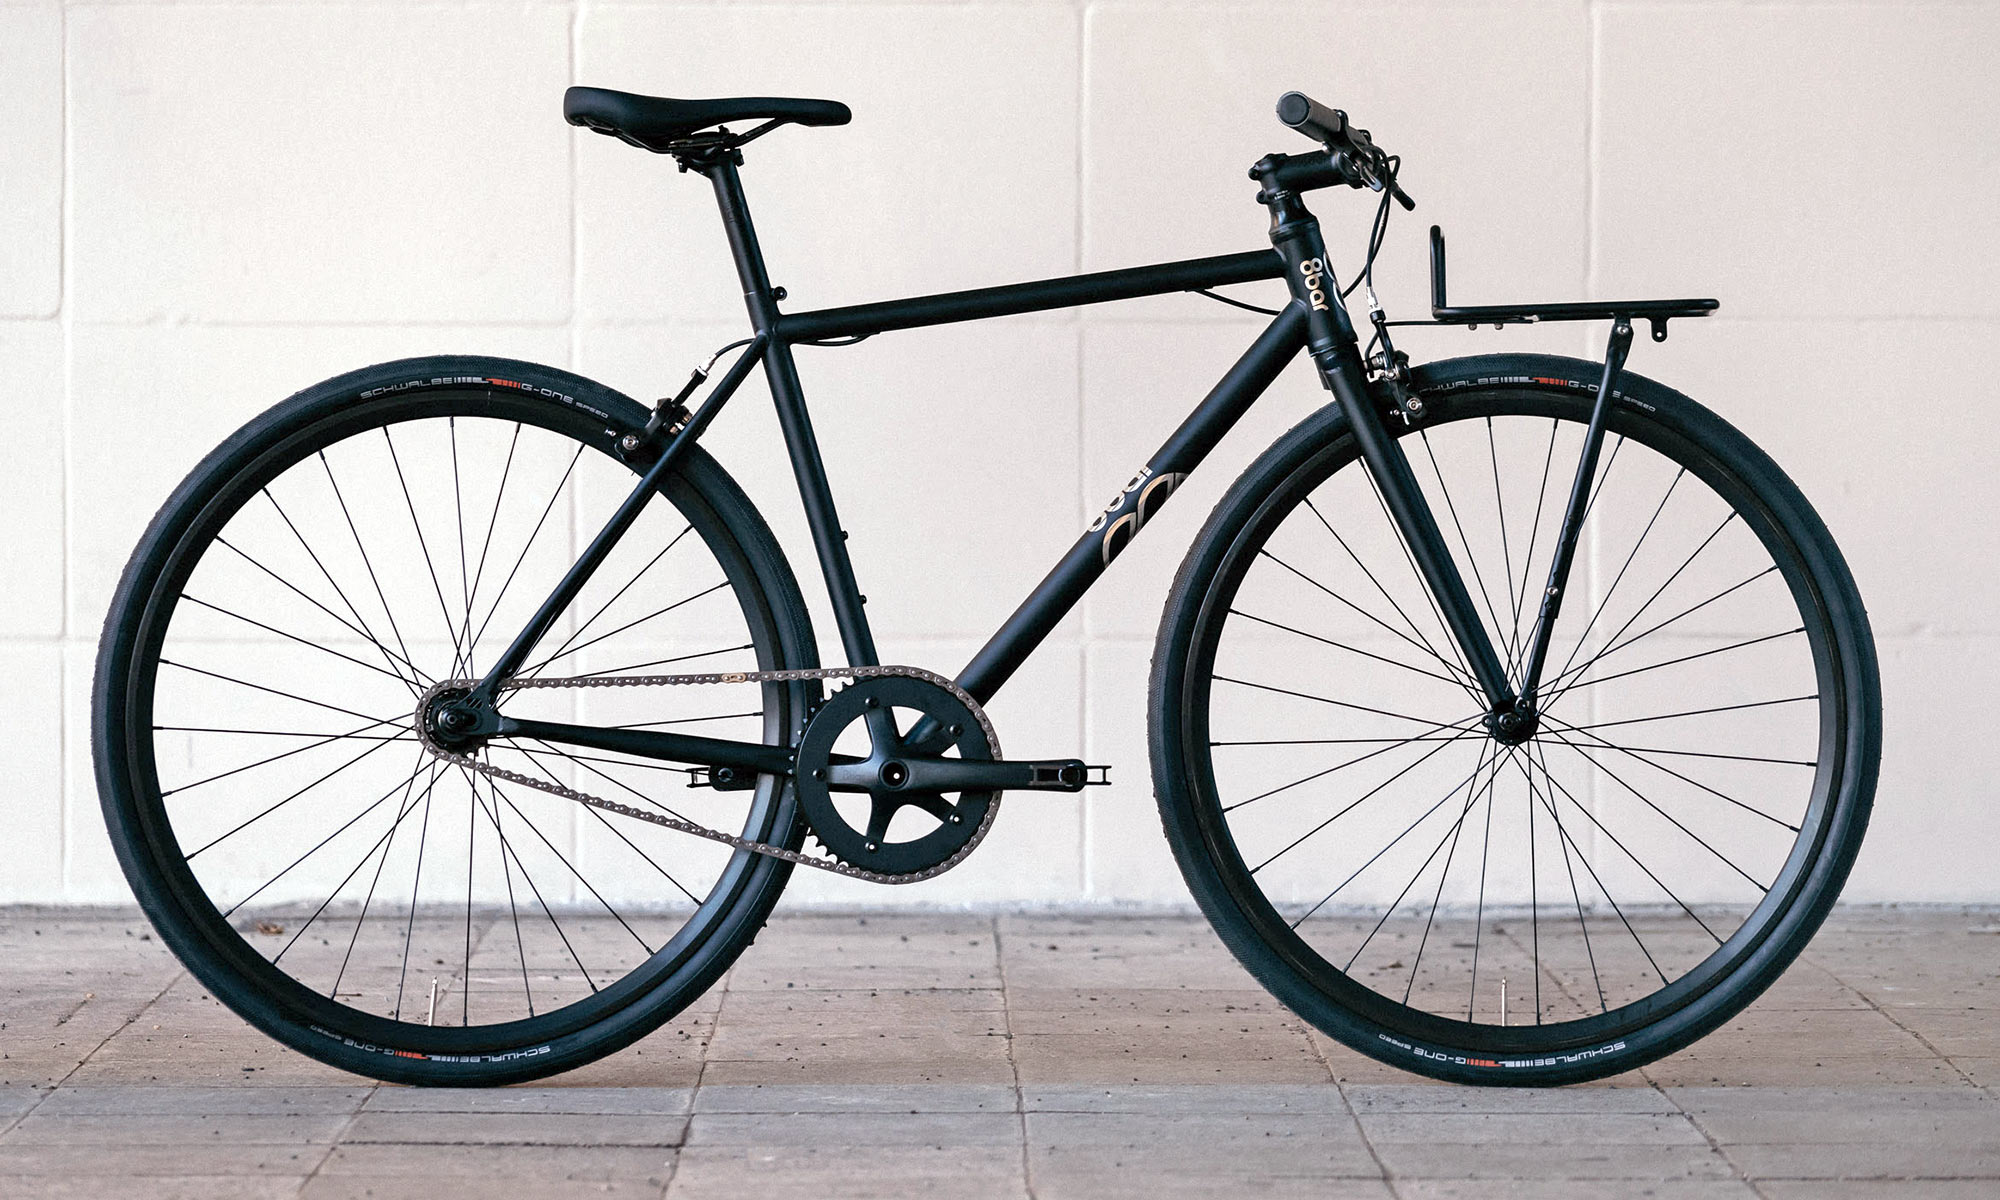 8bar Neukln steel v2 bicicletta fixie singlespeed versatile ed economica, foto di Stefan Haehnel, pendolare